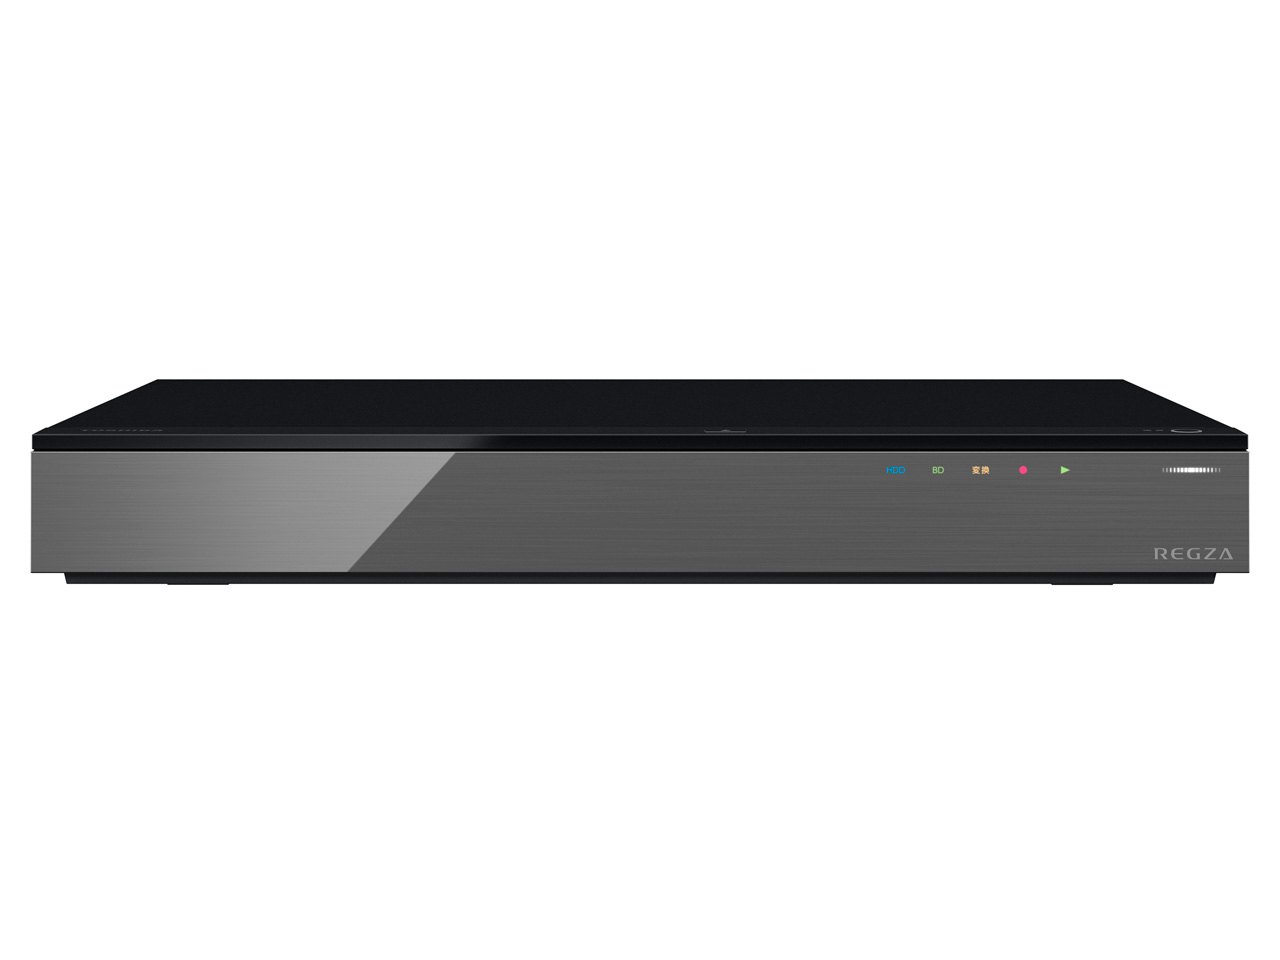 TVS REGZA ハイブリッド自動録画4Kレグザブルーレイ DBR-4KZ600 HDD容量6TB